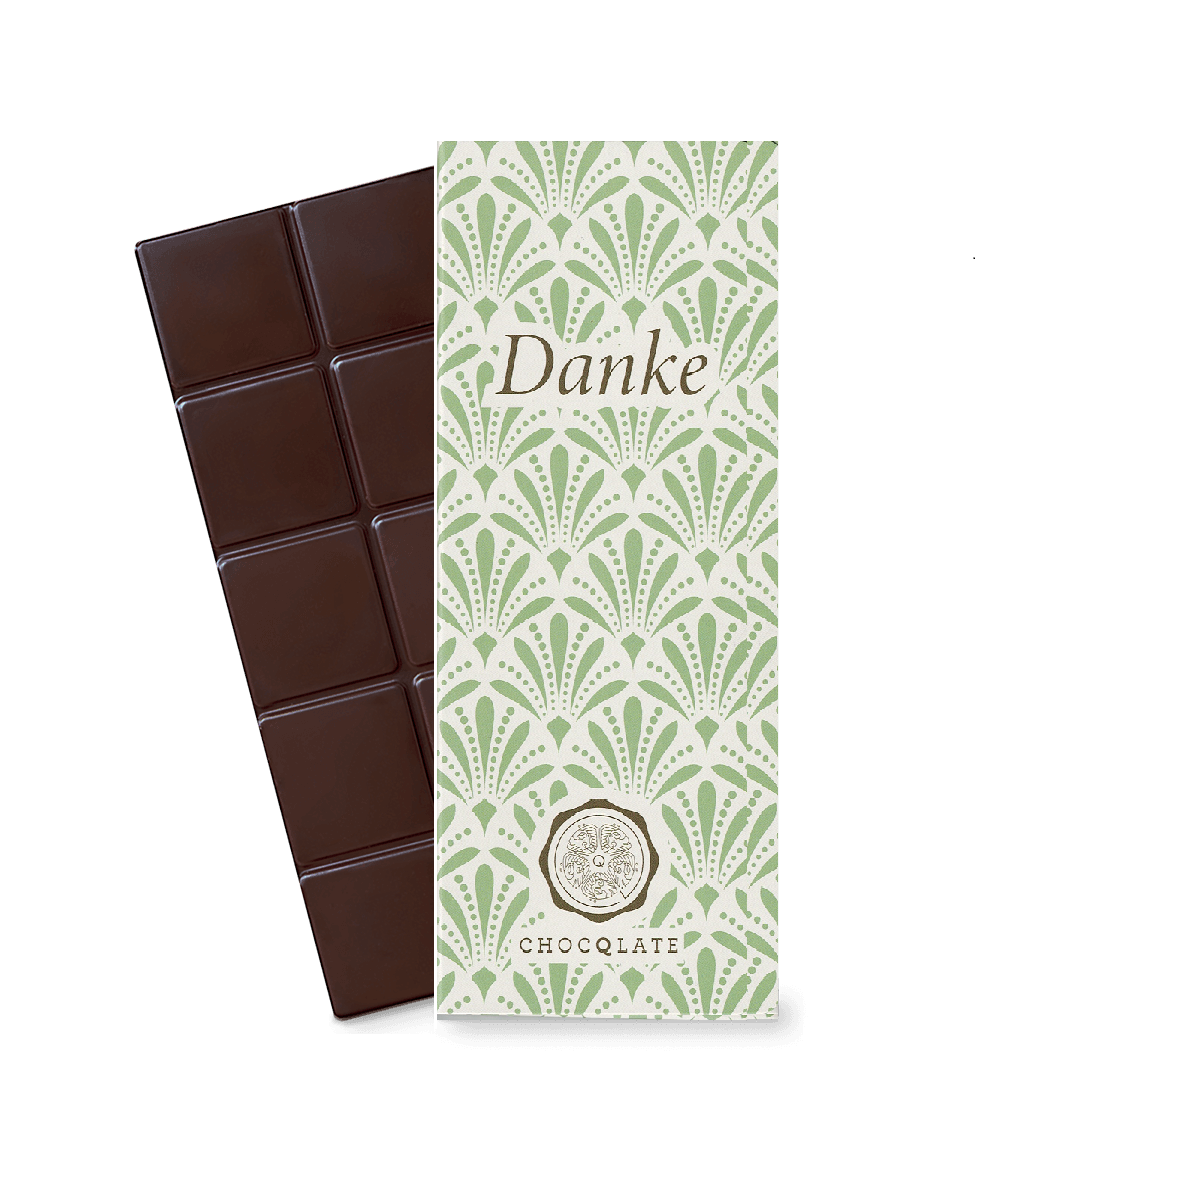 "Thank you" CHOCQLATE organic chocolate 50% cocoa